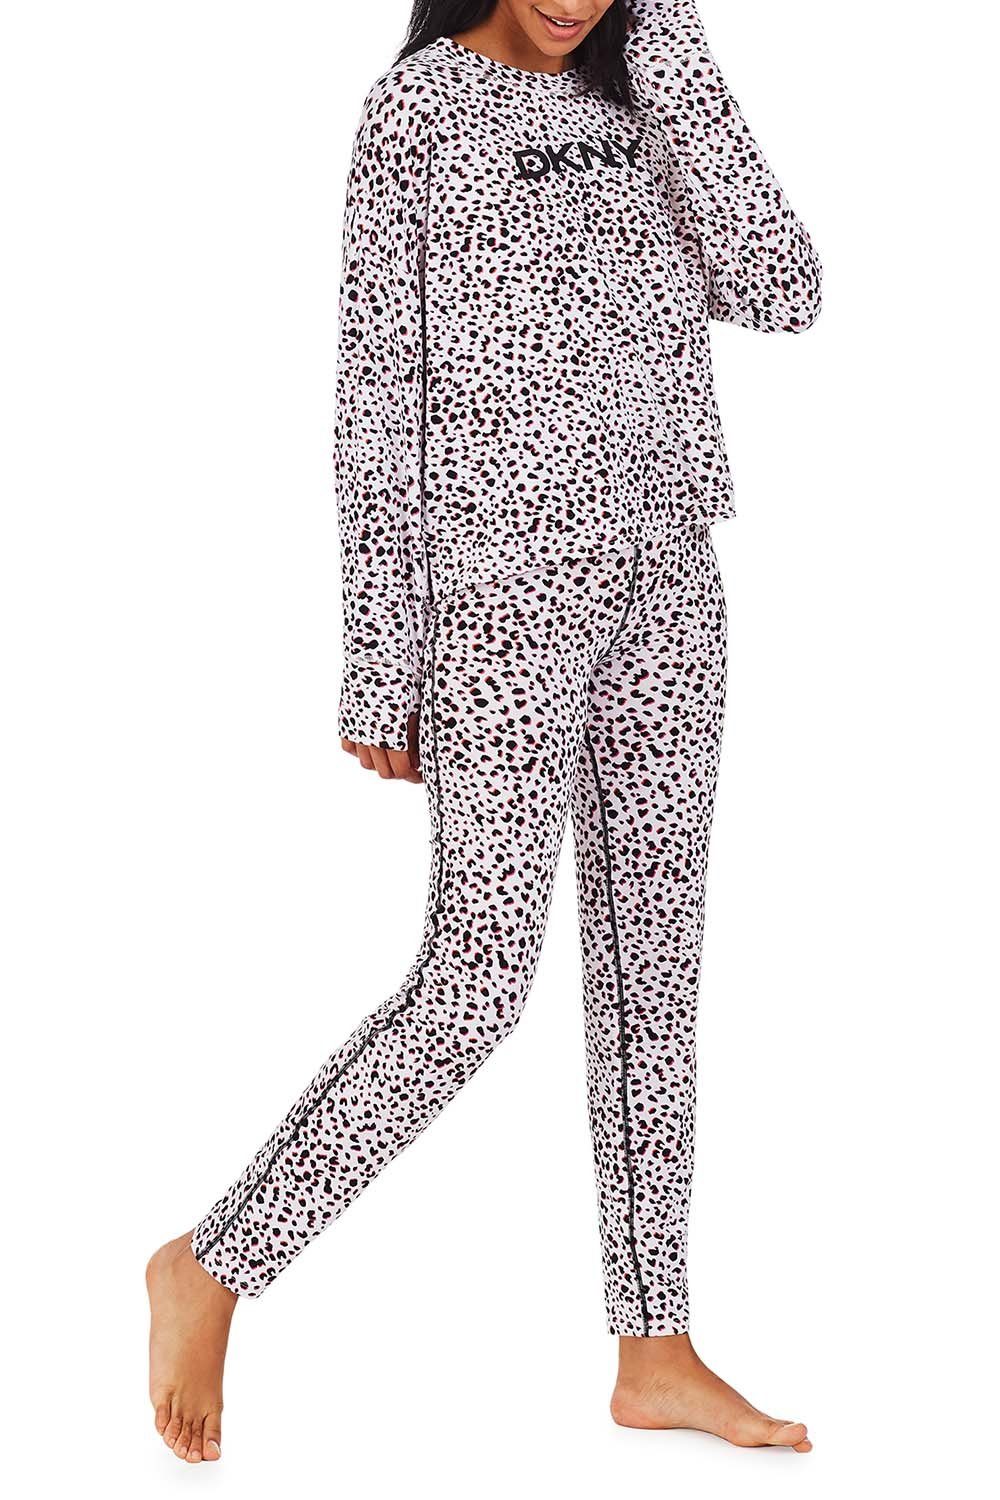 YI2922523 & Top DKNY Pyjama Legging Set